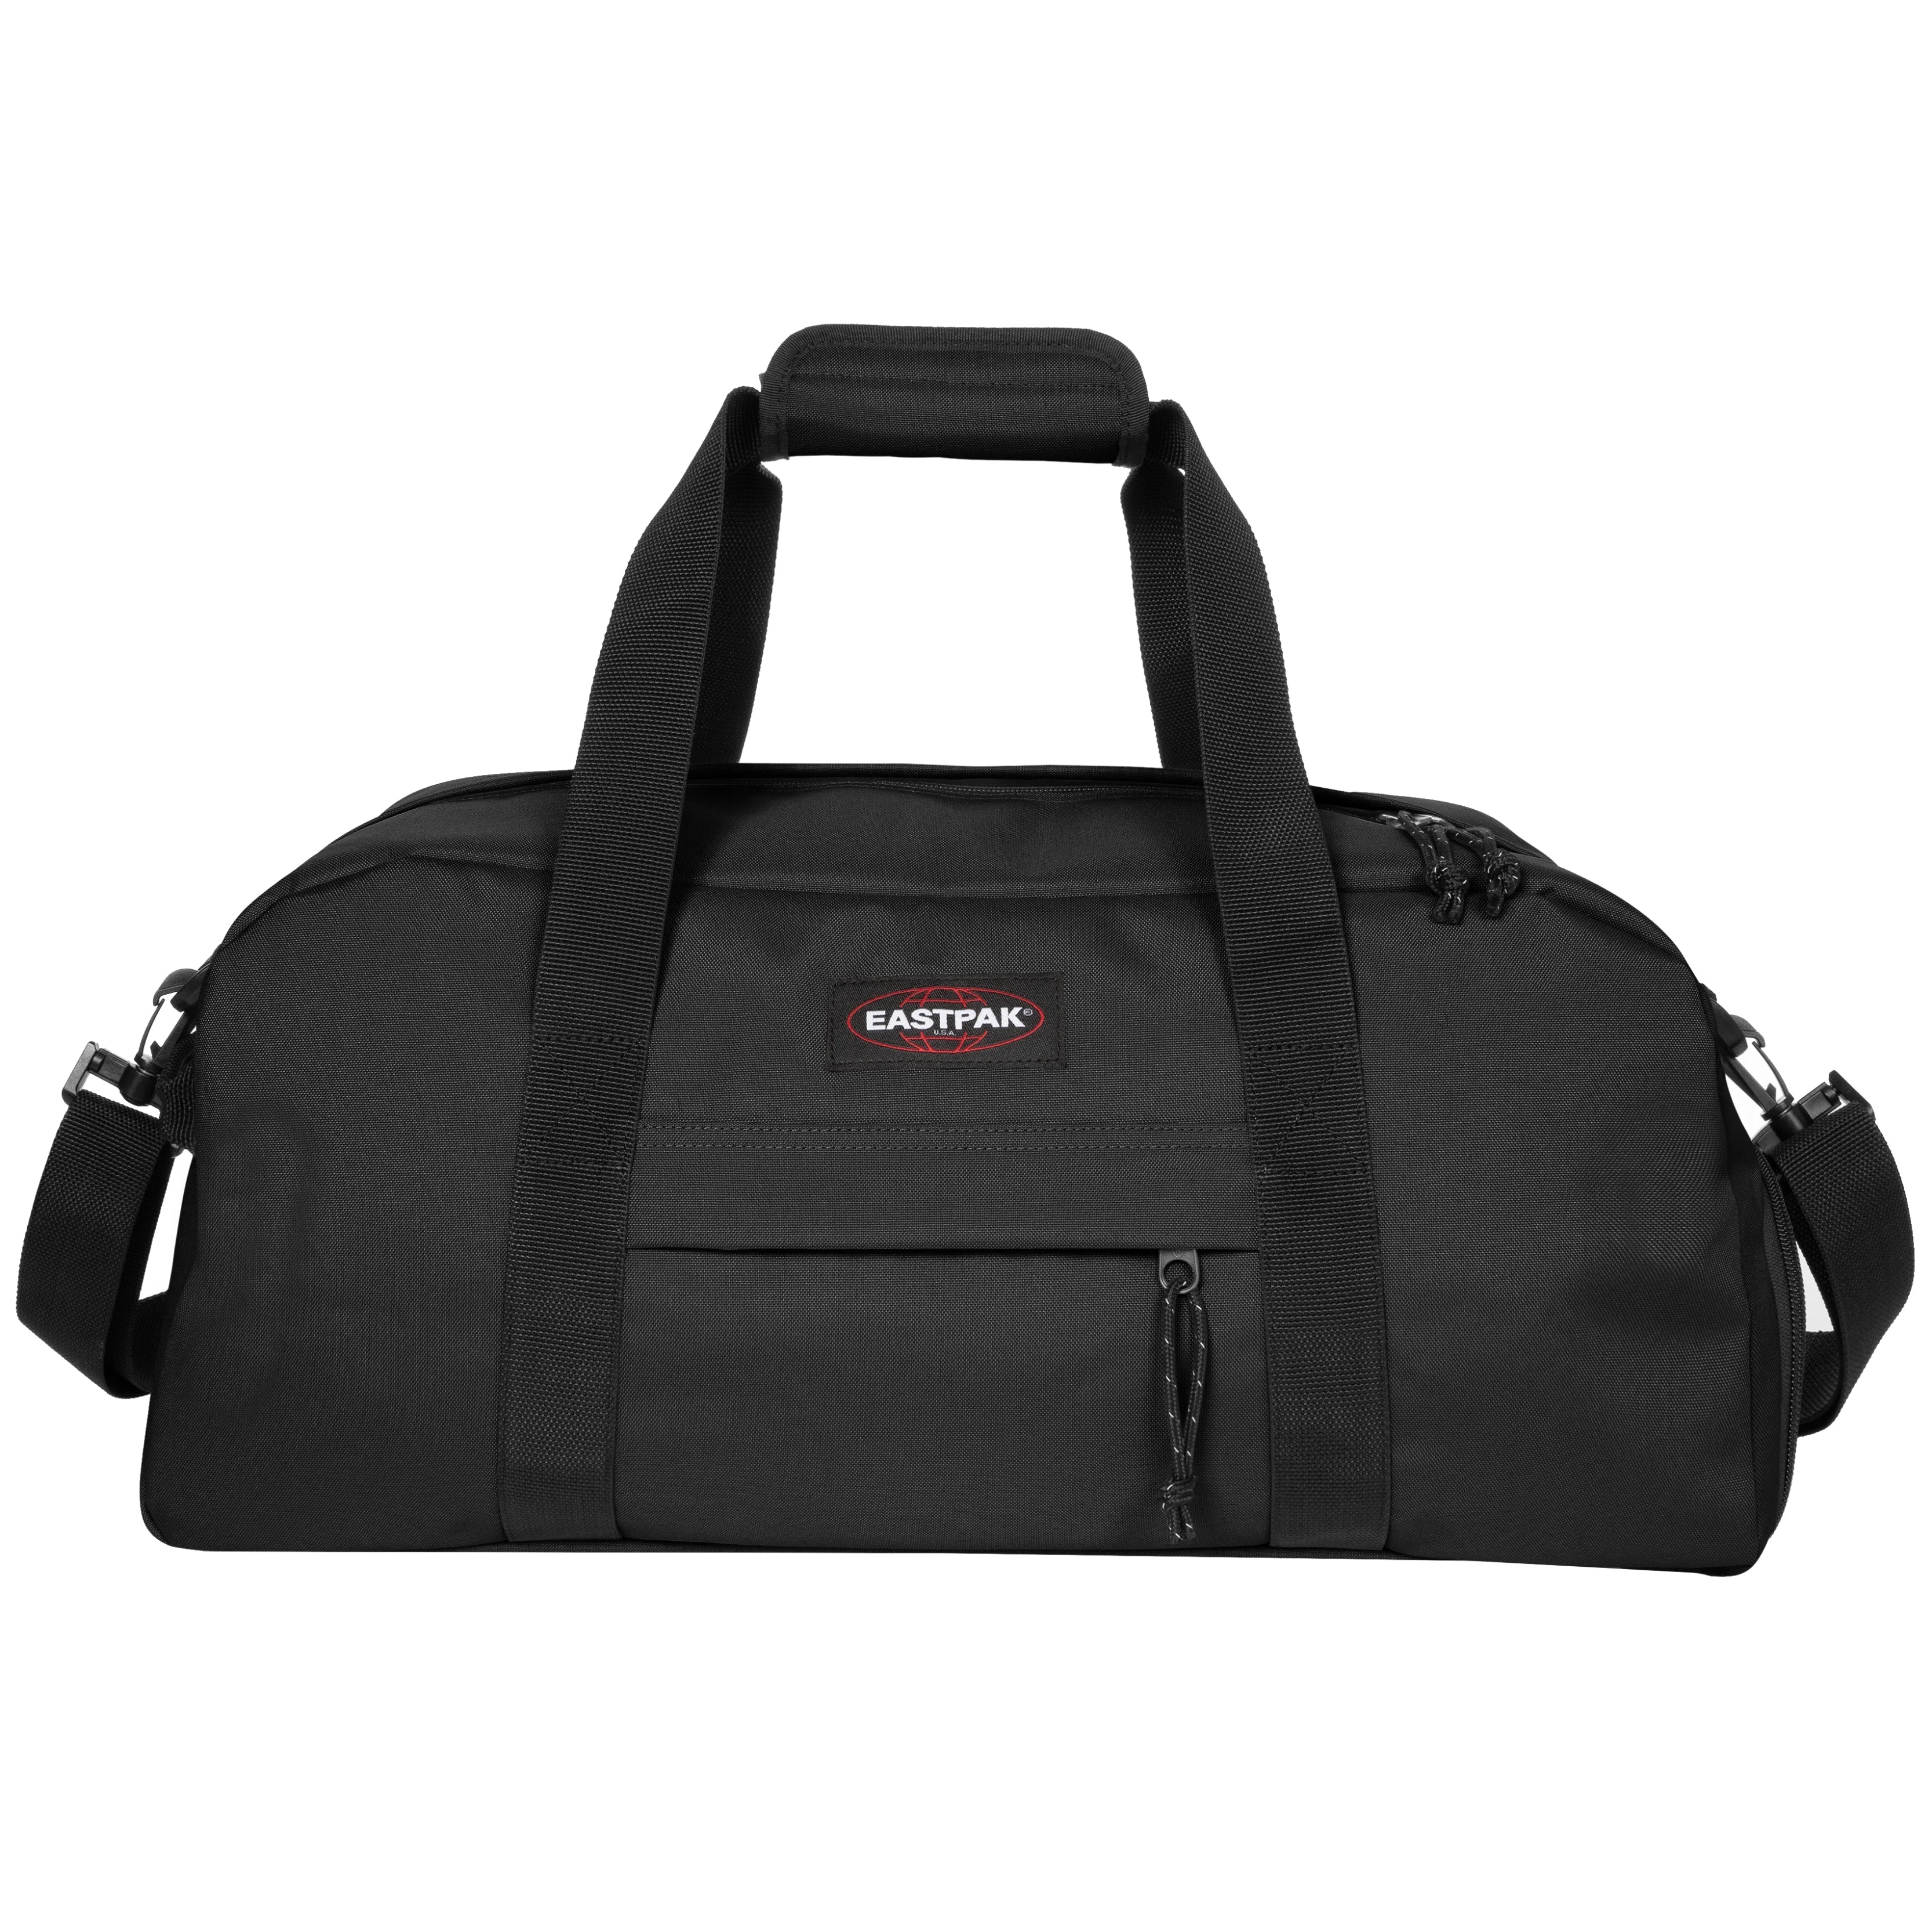 Eastpak Authentic Travel Stand More Travel Bag 53 cm - Black